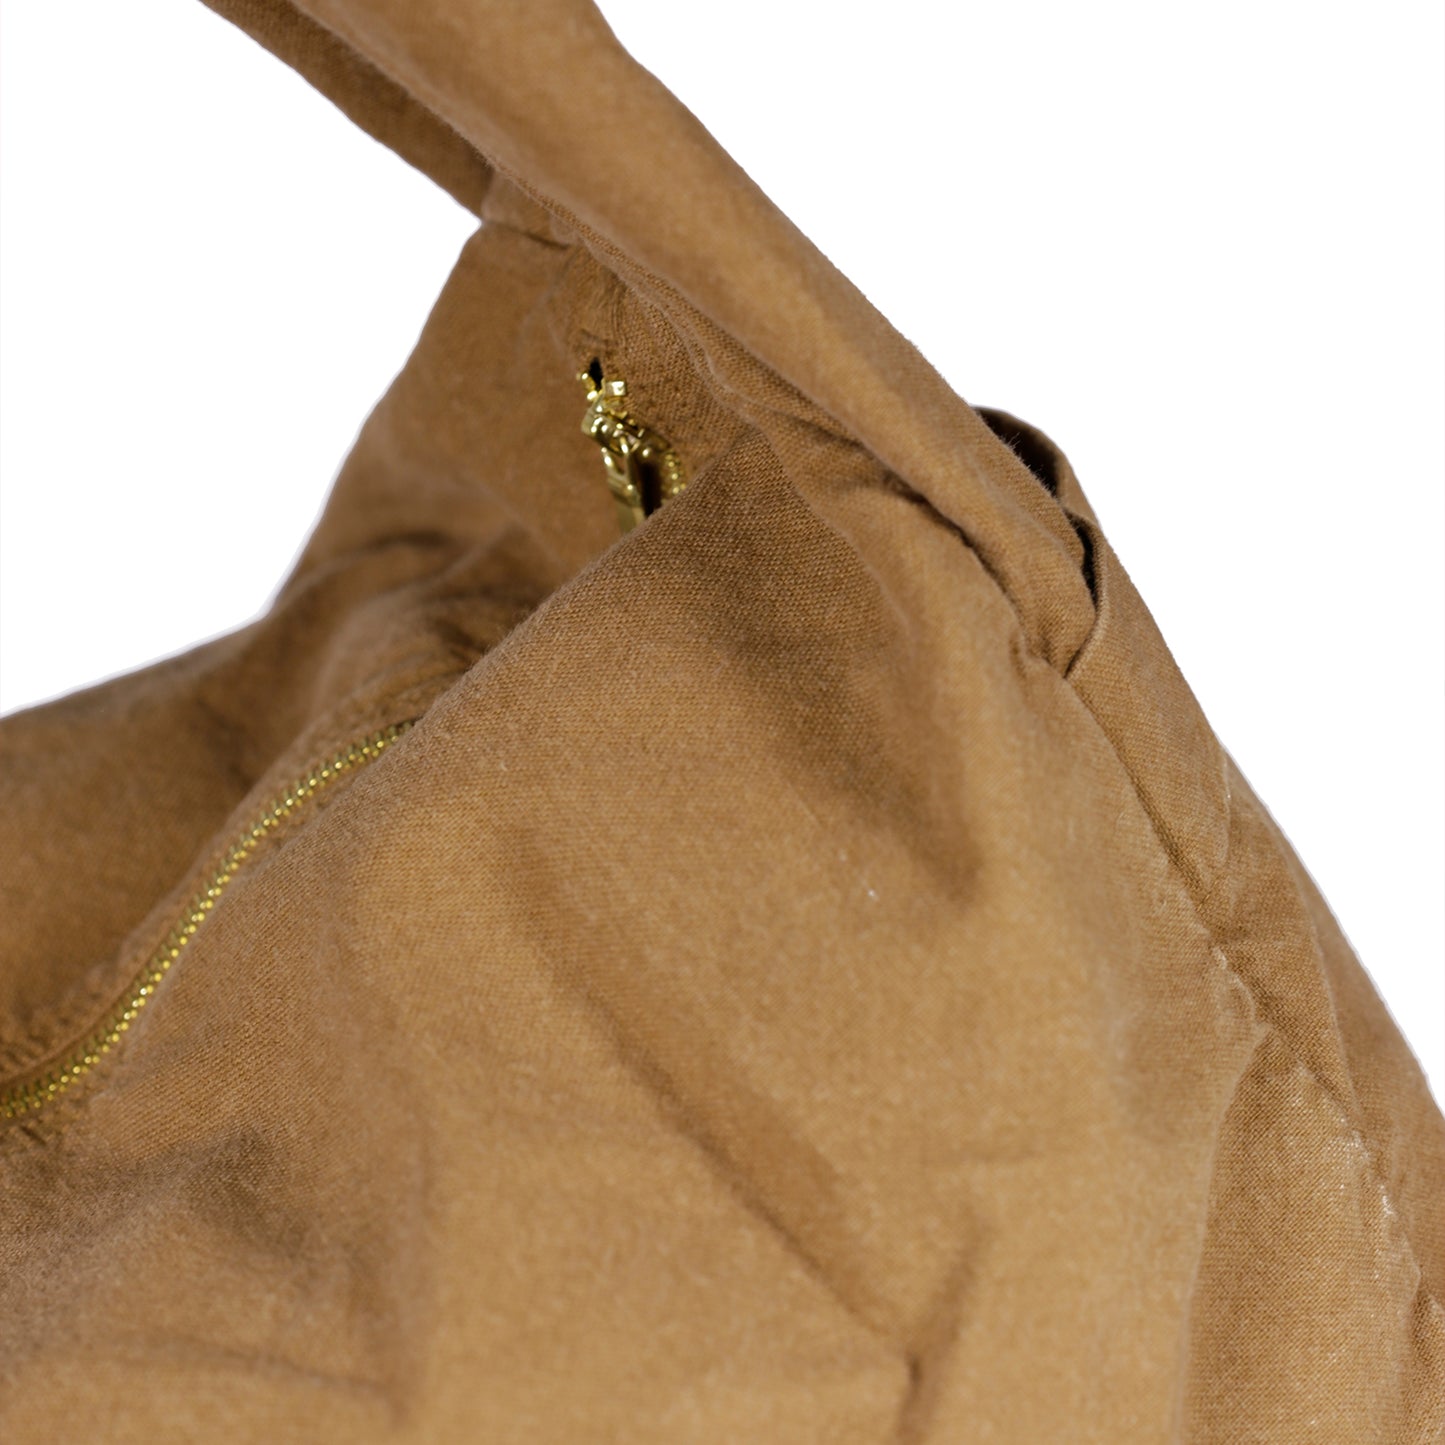 Small hazelnut cotton hobo bag